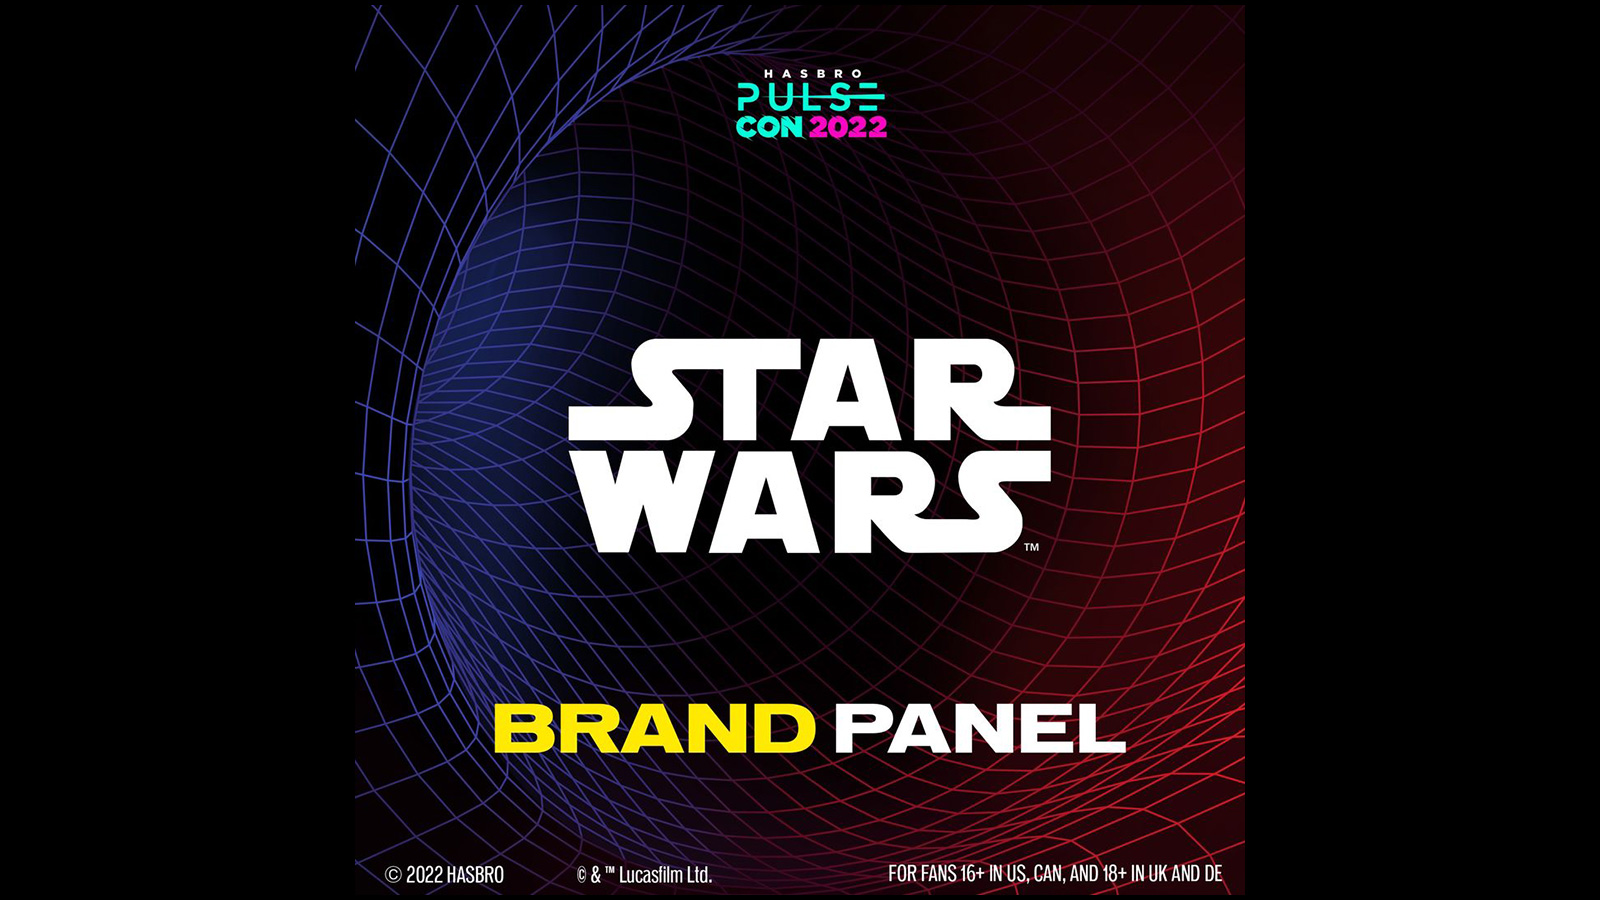 Hasbro Pulse Con 2022 - Star Wars Brand Panel October 1st